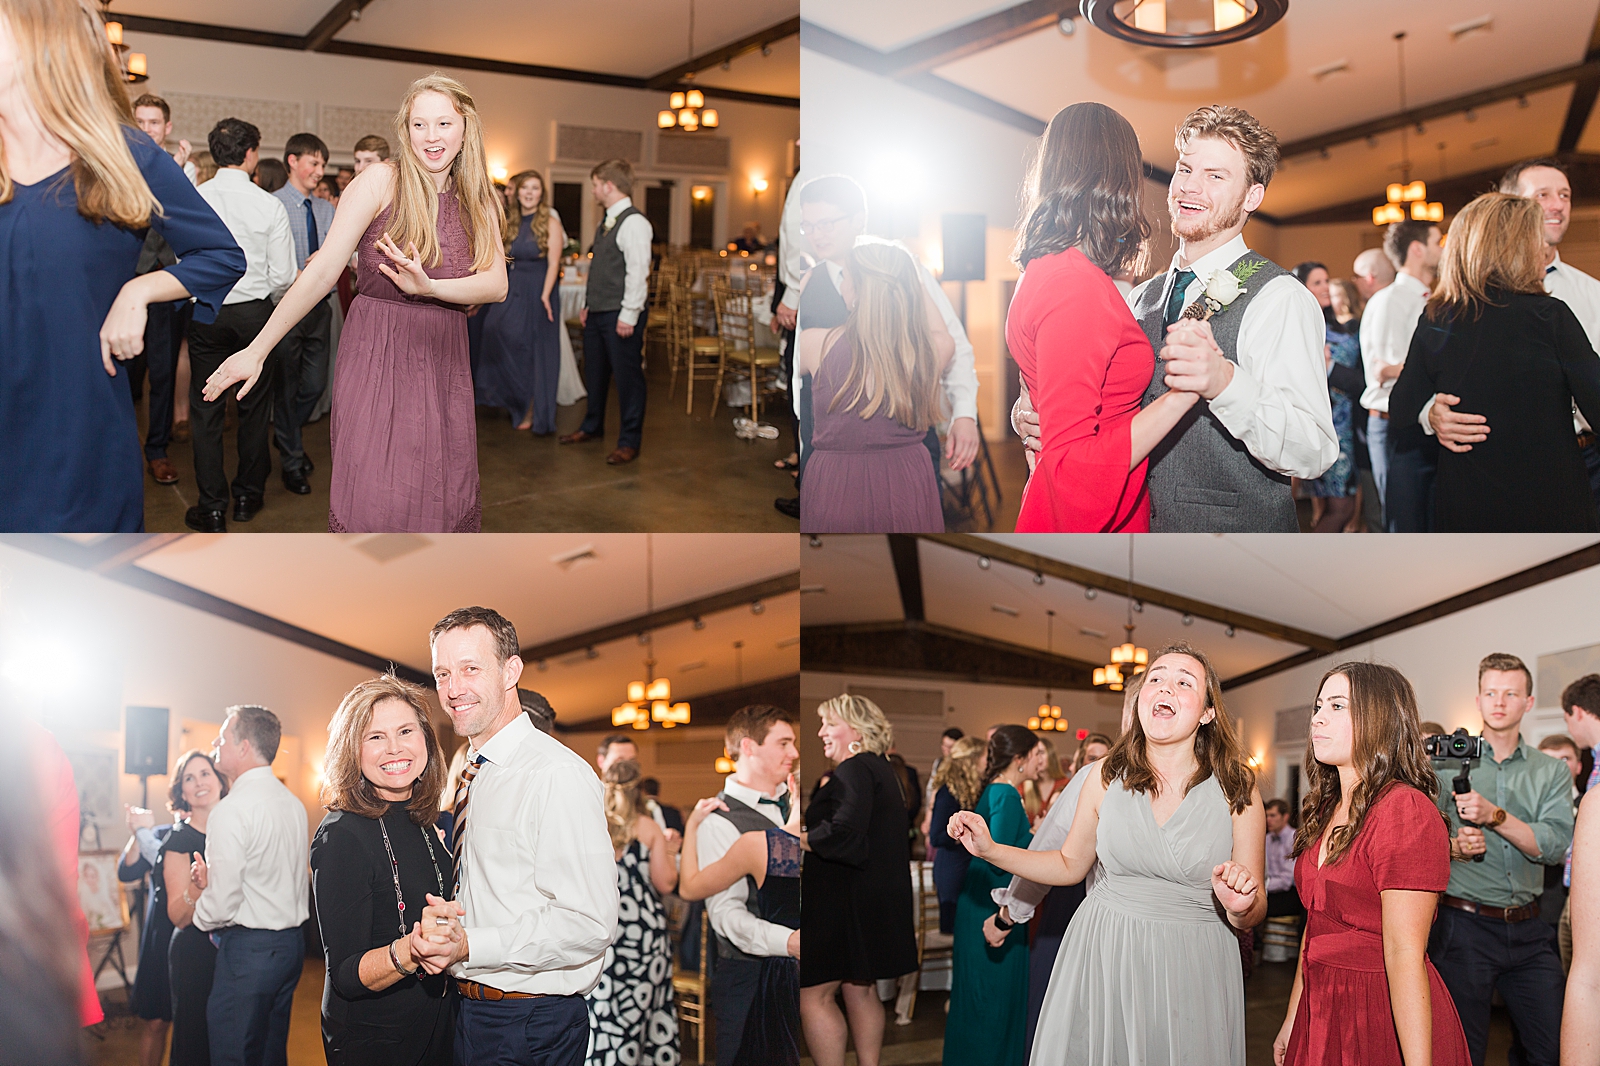 Charlotte Wedding Reception Guests Dancing Photos